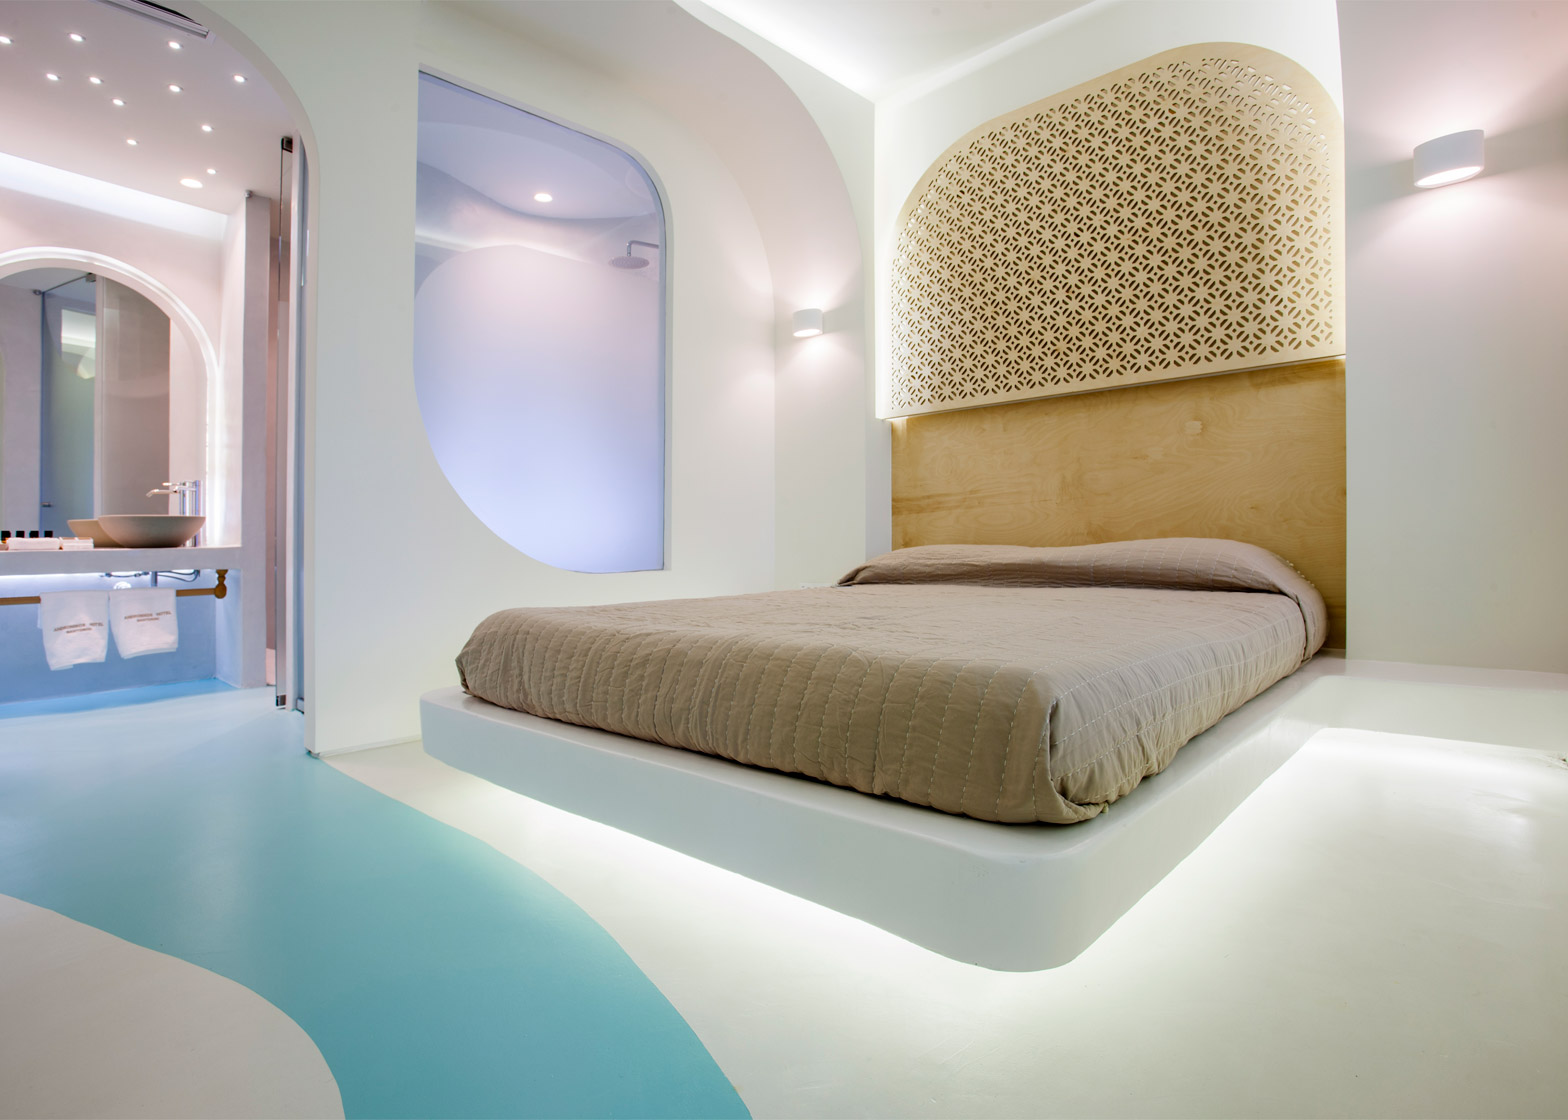 Modern bedroom with indirect lighting